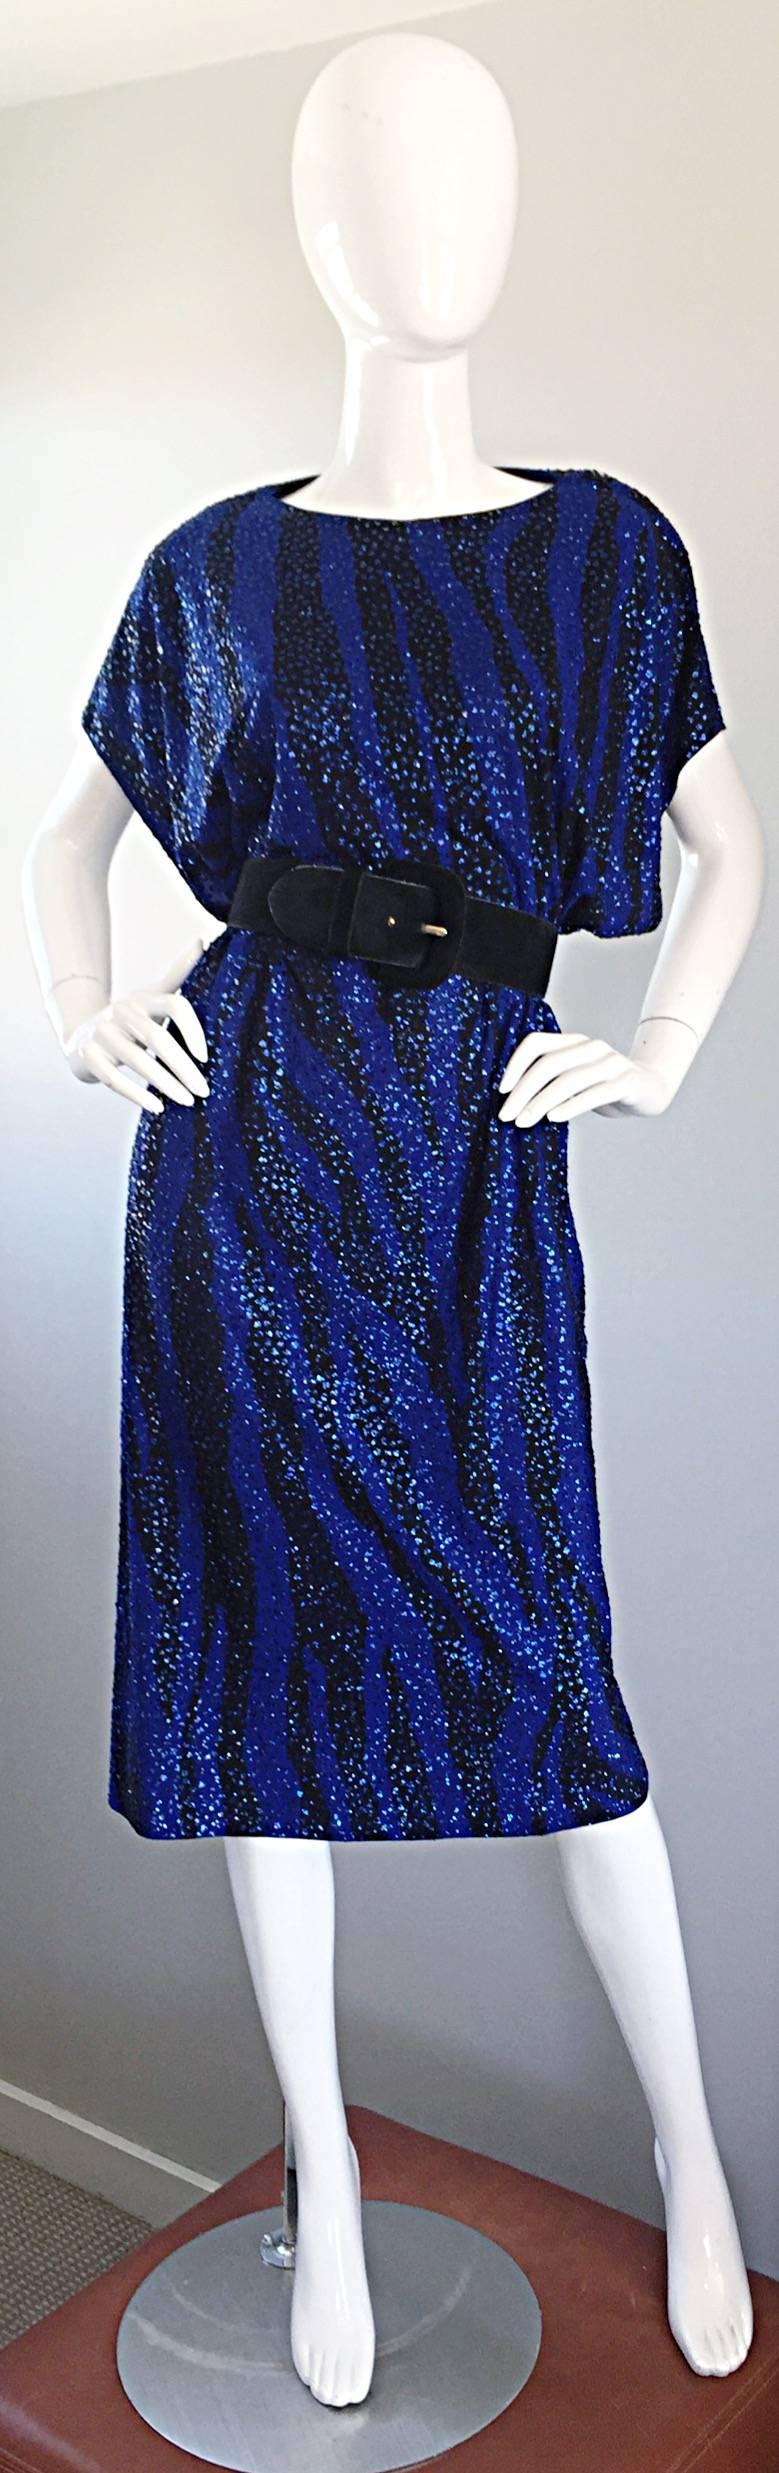 blue and black zebra print dress